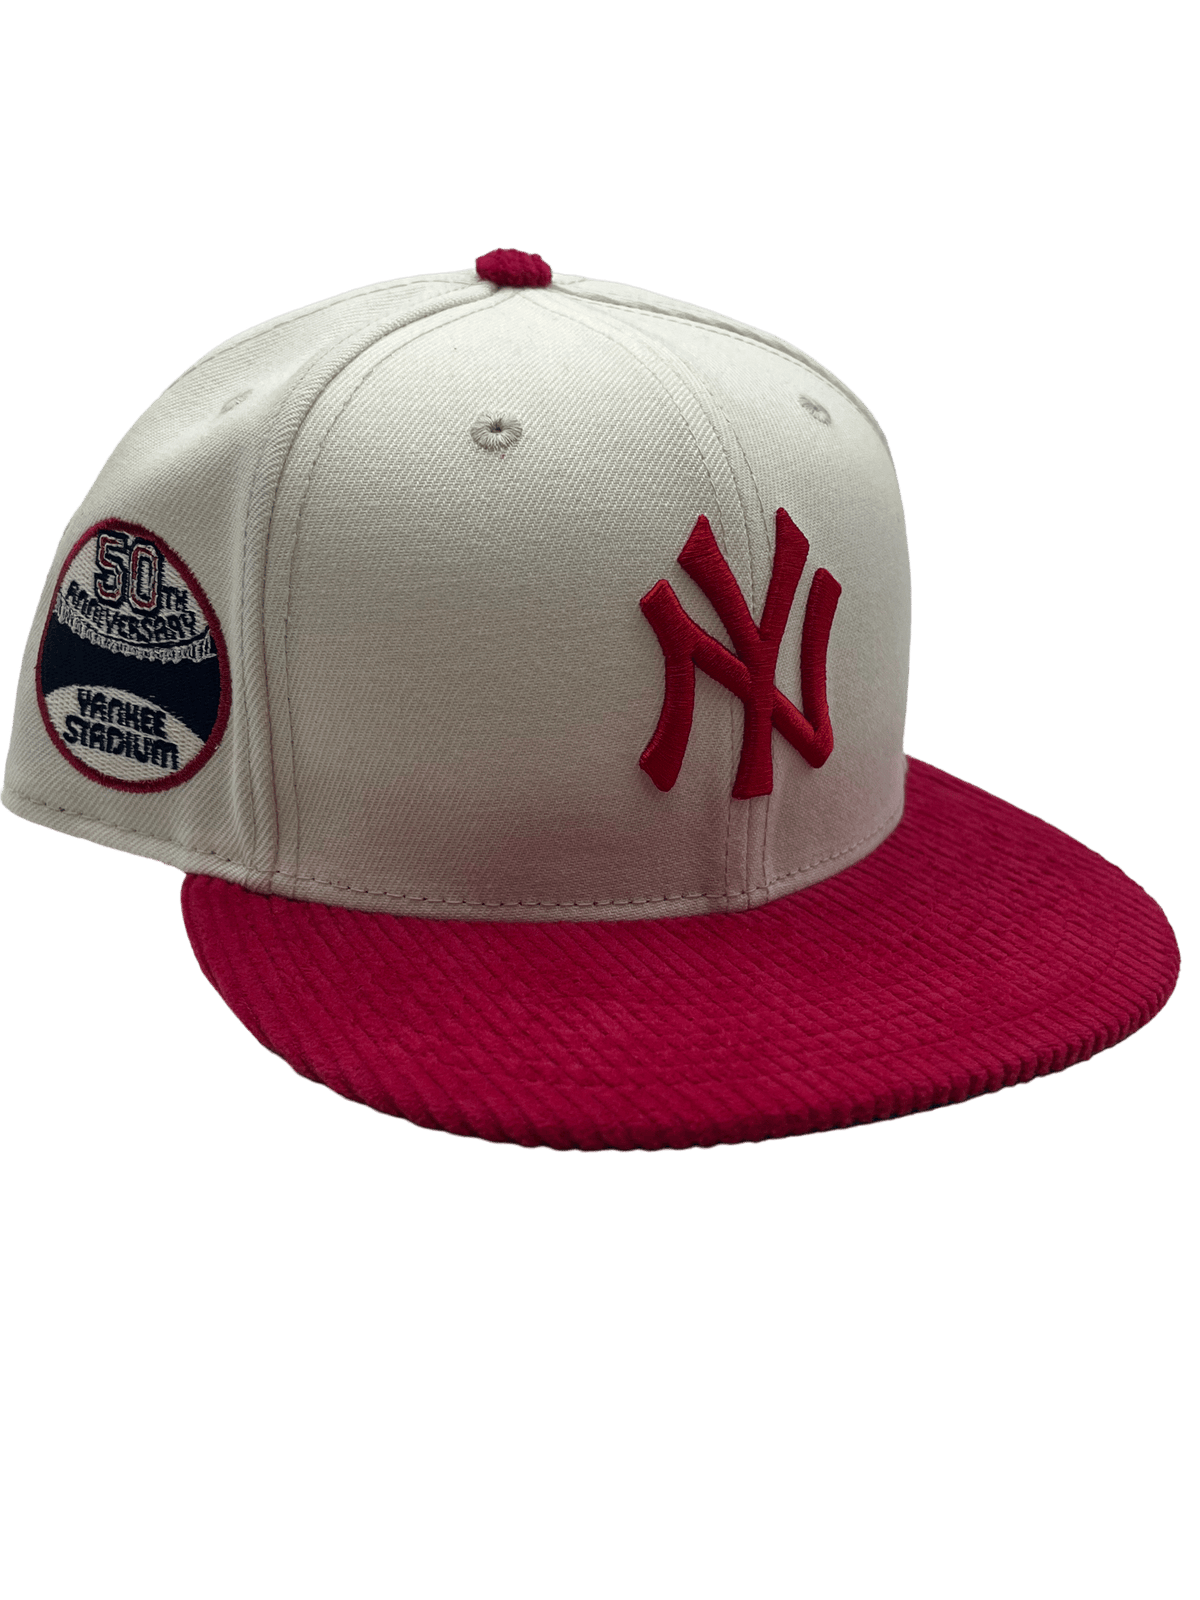 Oakland Athletics New Era 50th Anniversary Chrome Alternate Undervisor  59FIFTY Fitted Hat - Cream